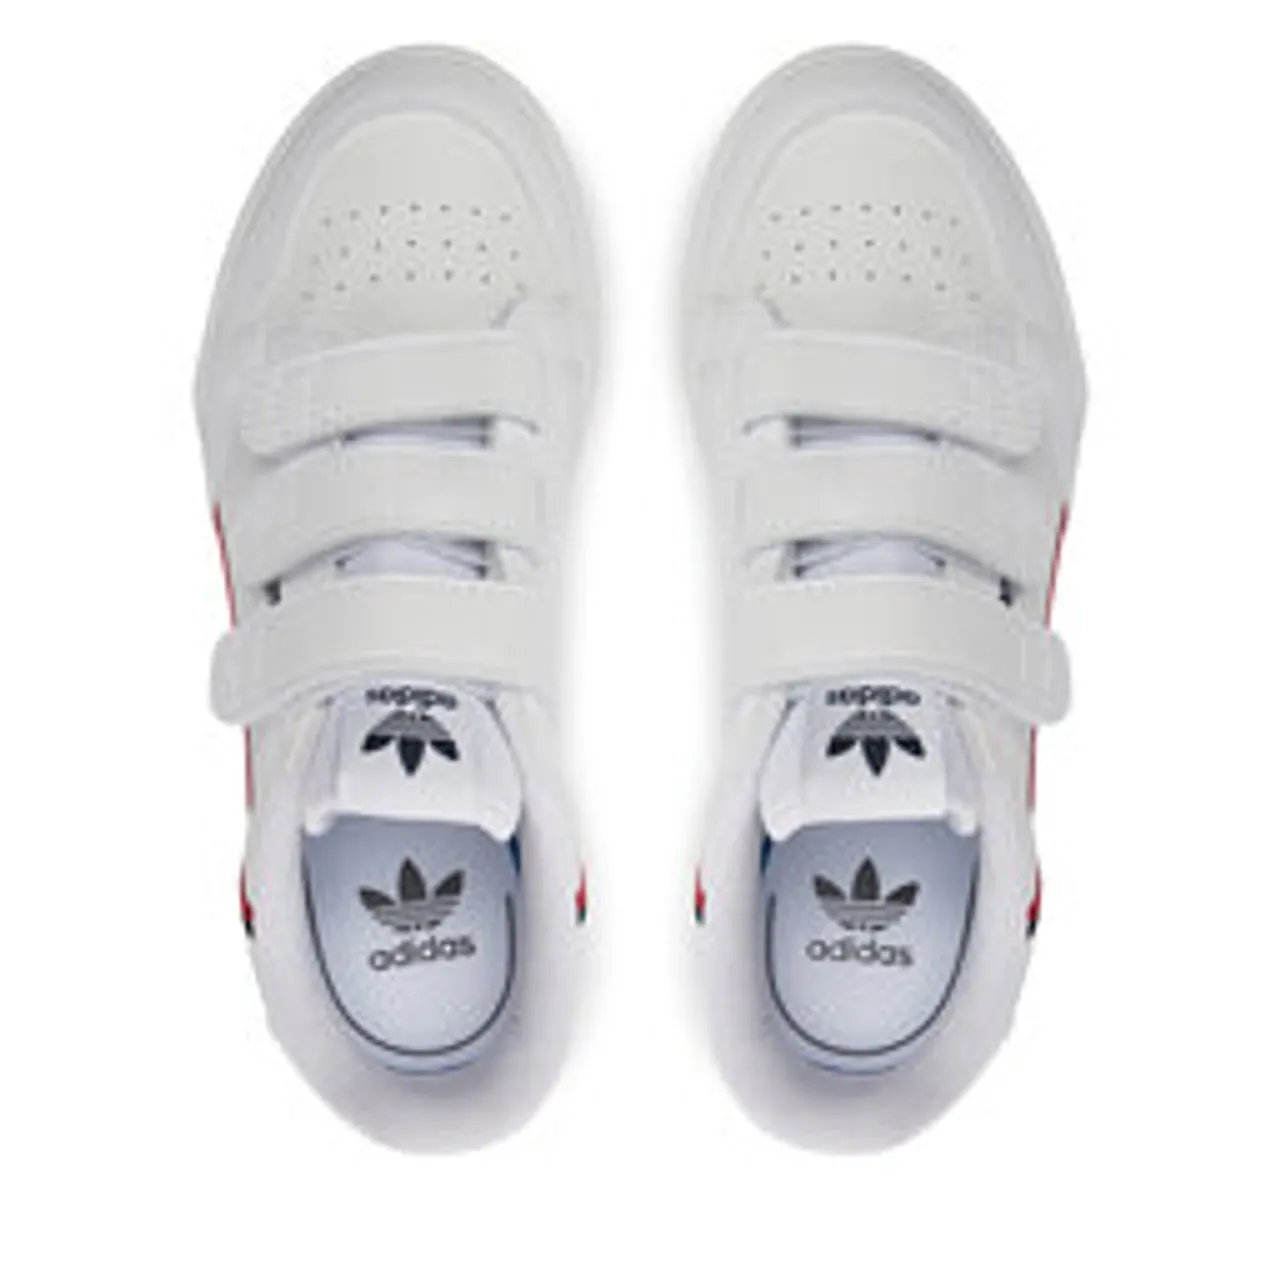 Sneakers adidas Continental 80 Cf C EH3222 Weiß